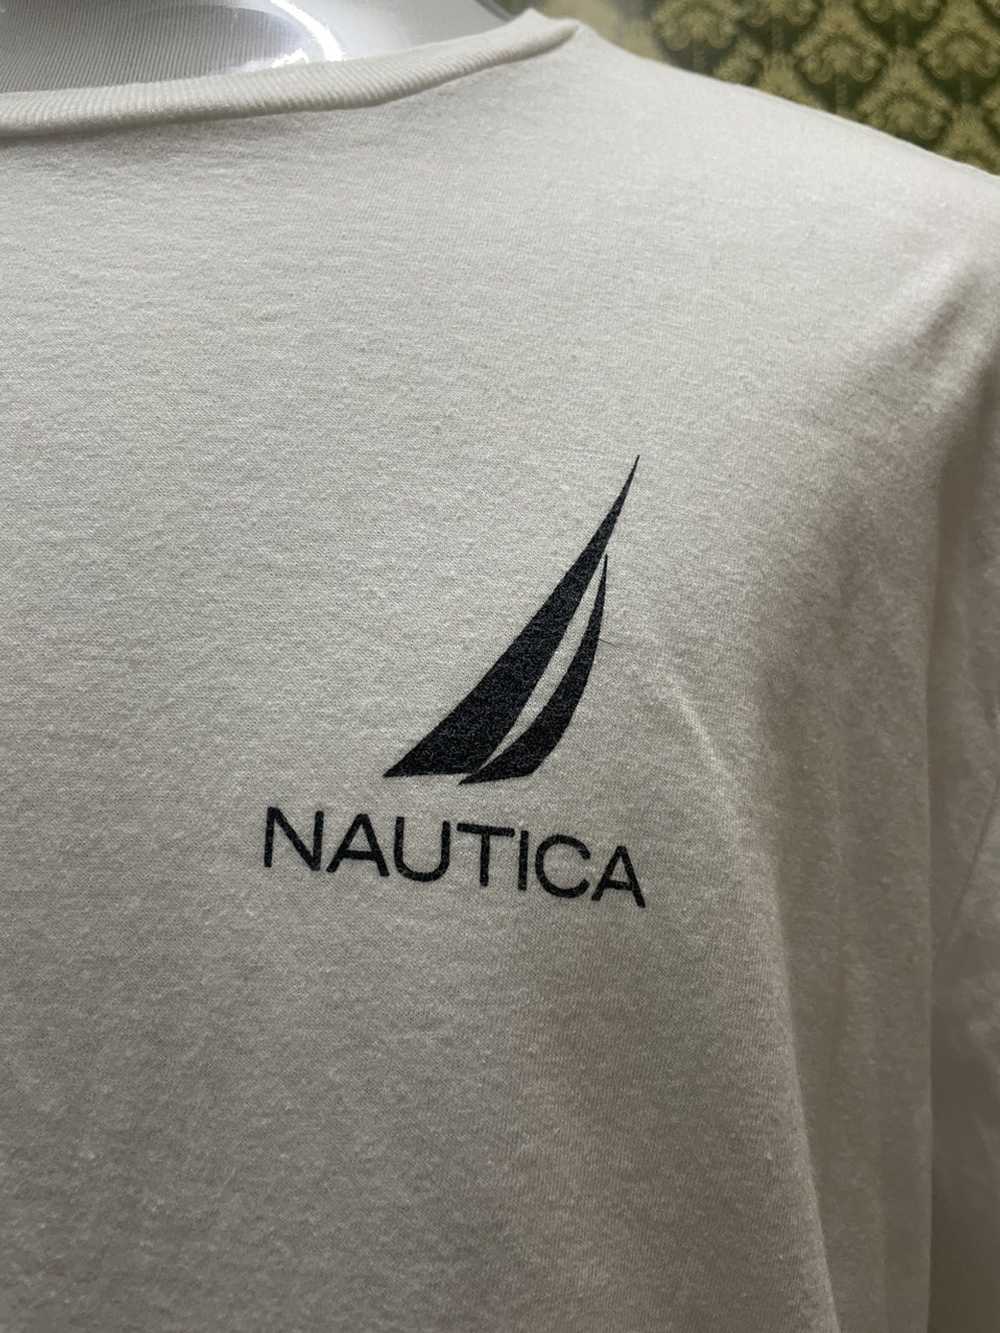 Nautica × Other × Rare Nautica T shirt - image 3